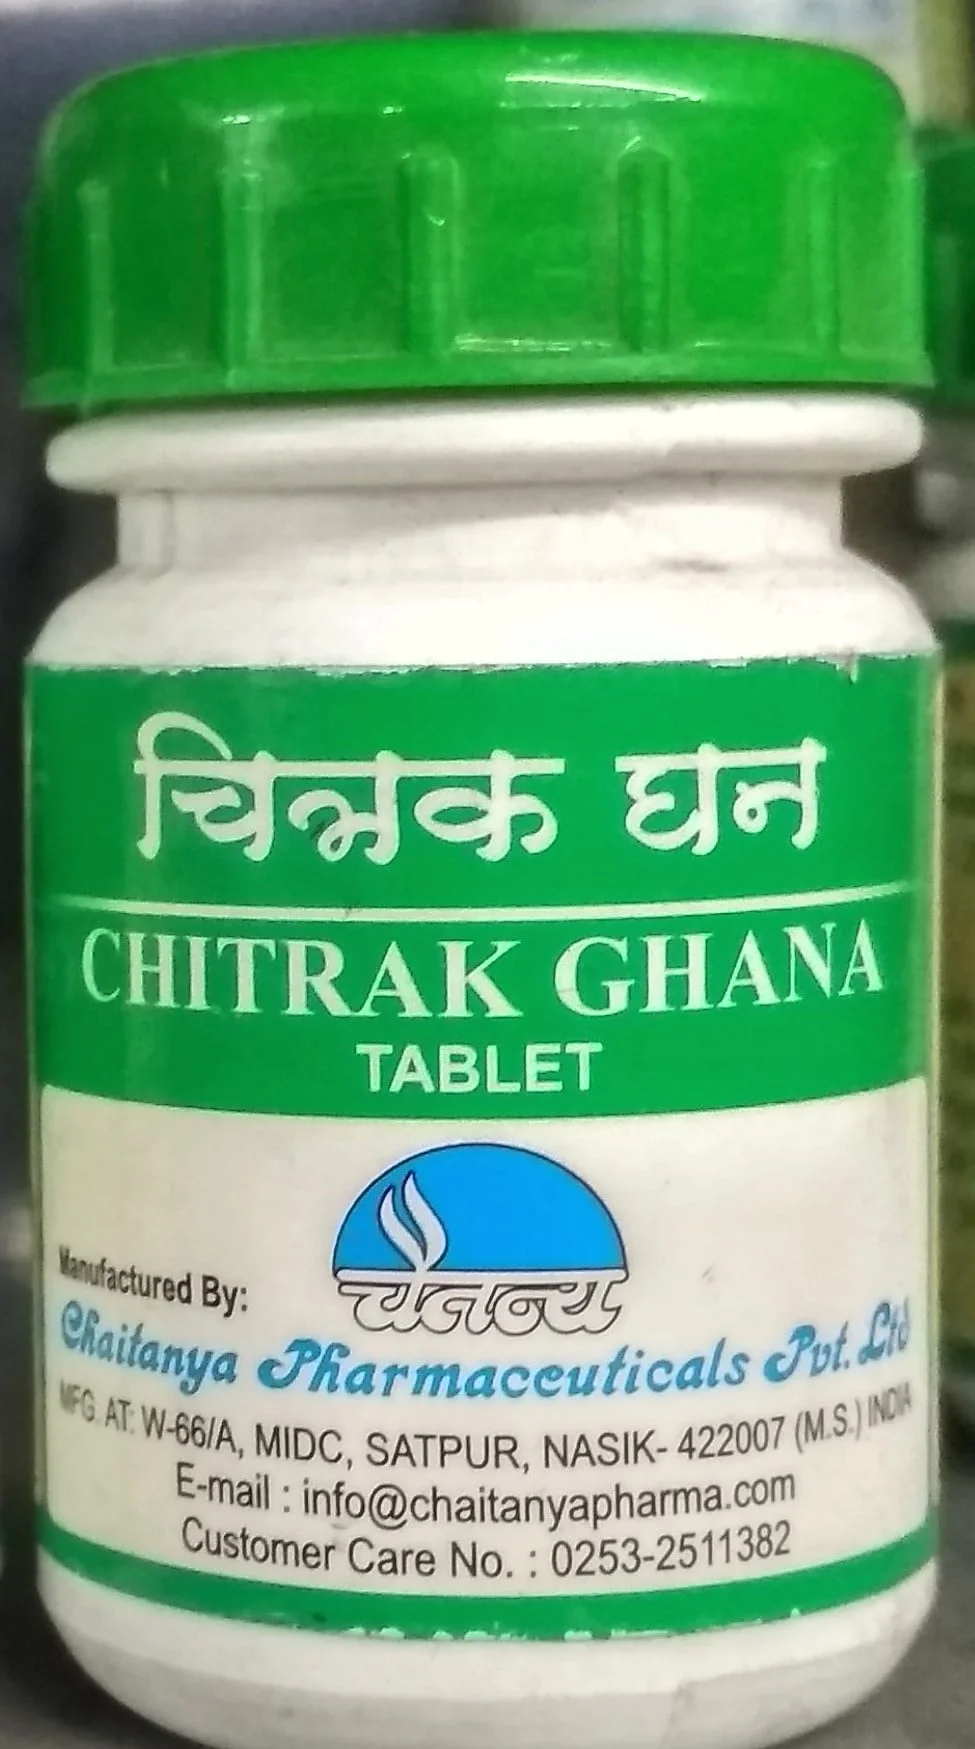 chitrak ghana 500tab upto 20% off free shipping chaitanya pharmaceuticals